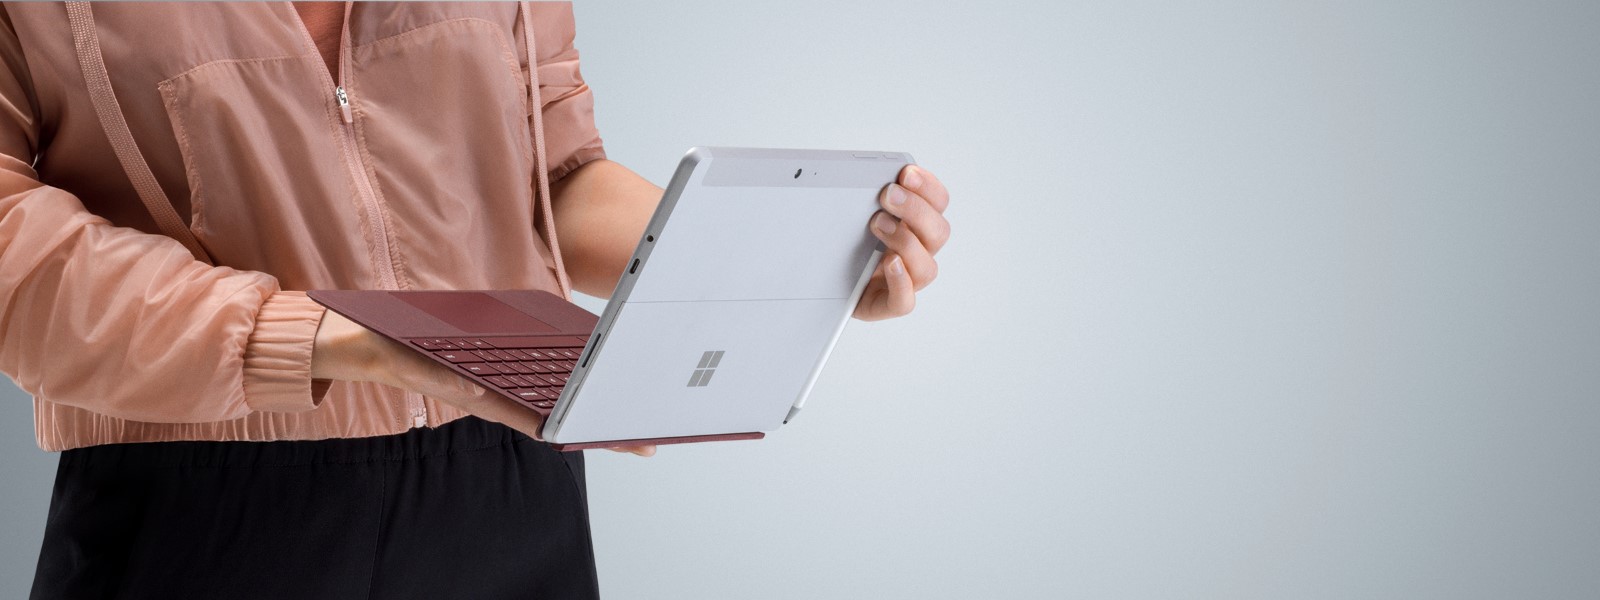 Microsoft Surface Go (Intel Pentium Gold, 8GB RAM, 128GB) (MCZ-00001)